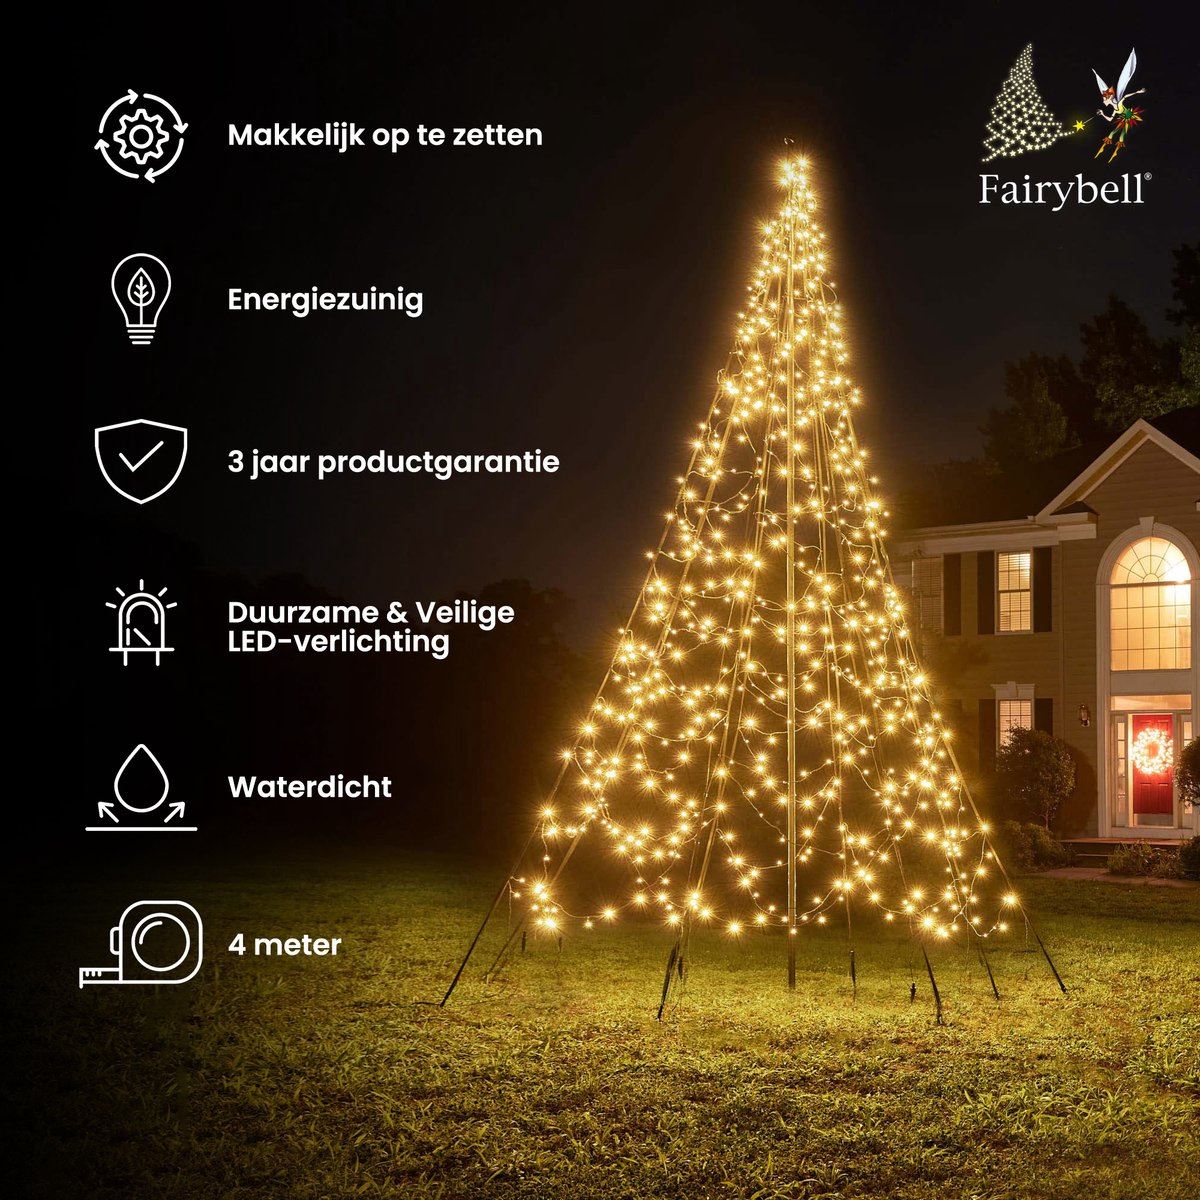 Fairybell flagpole Christmas tree - 400 cm - 640 warm white led lights - includes flagpole